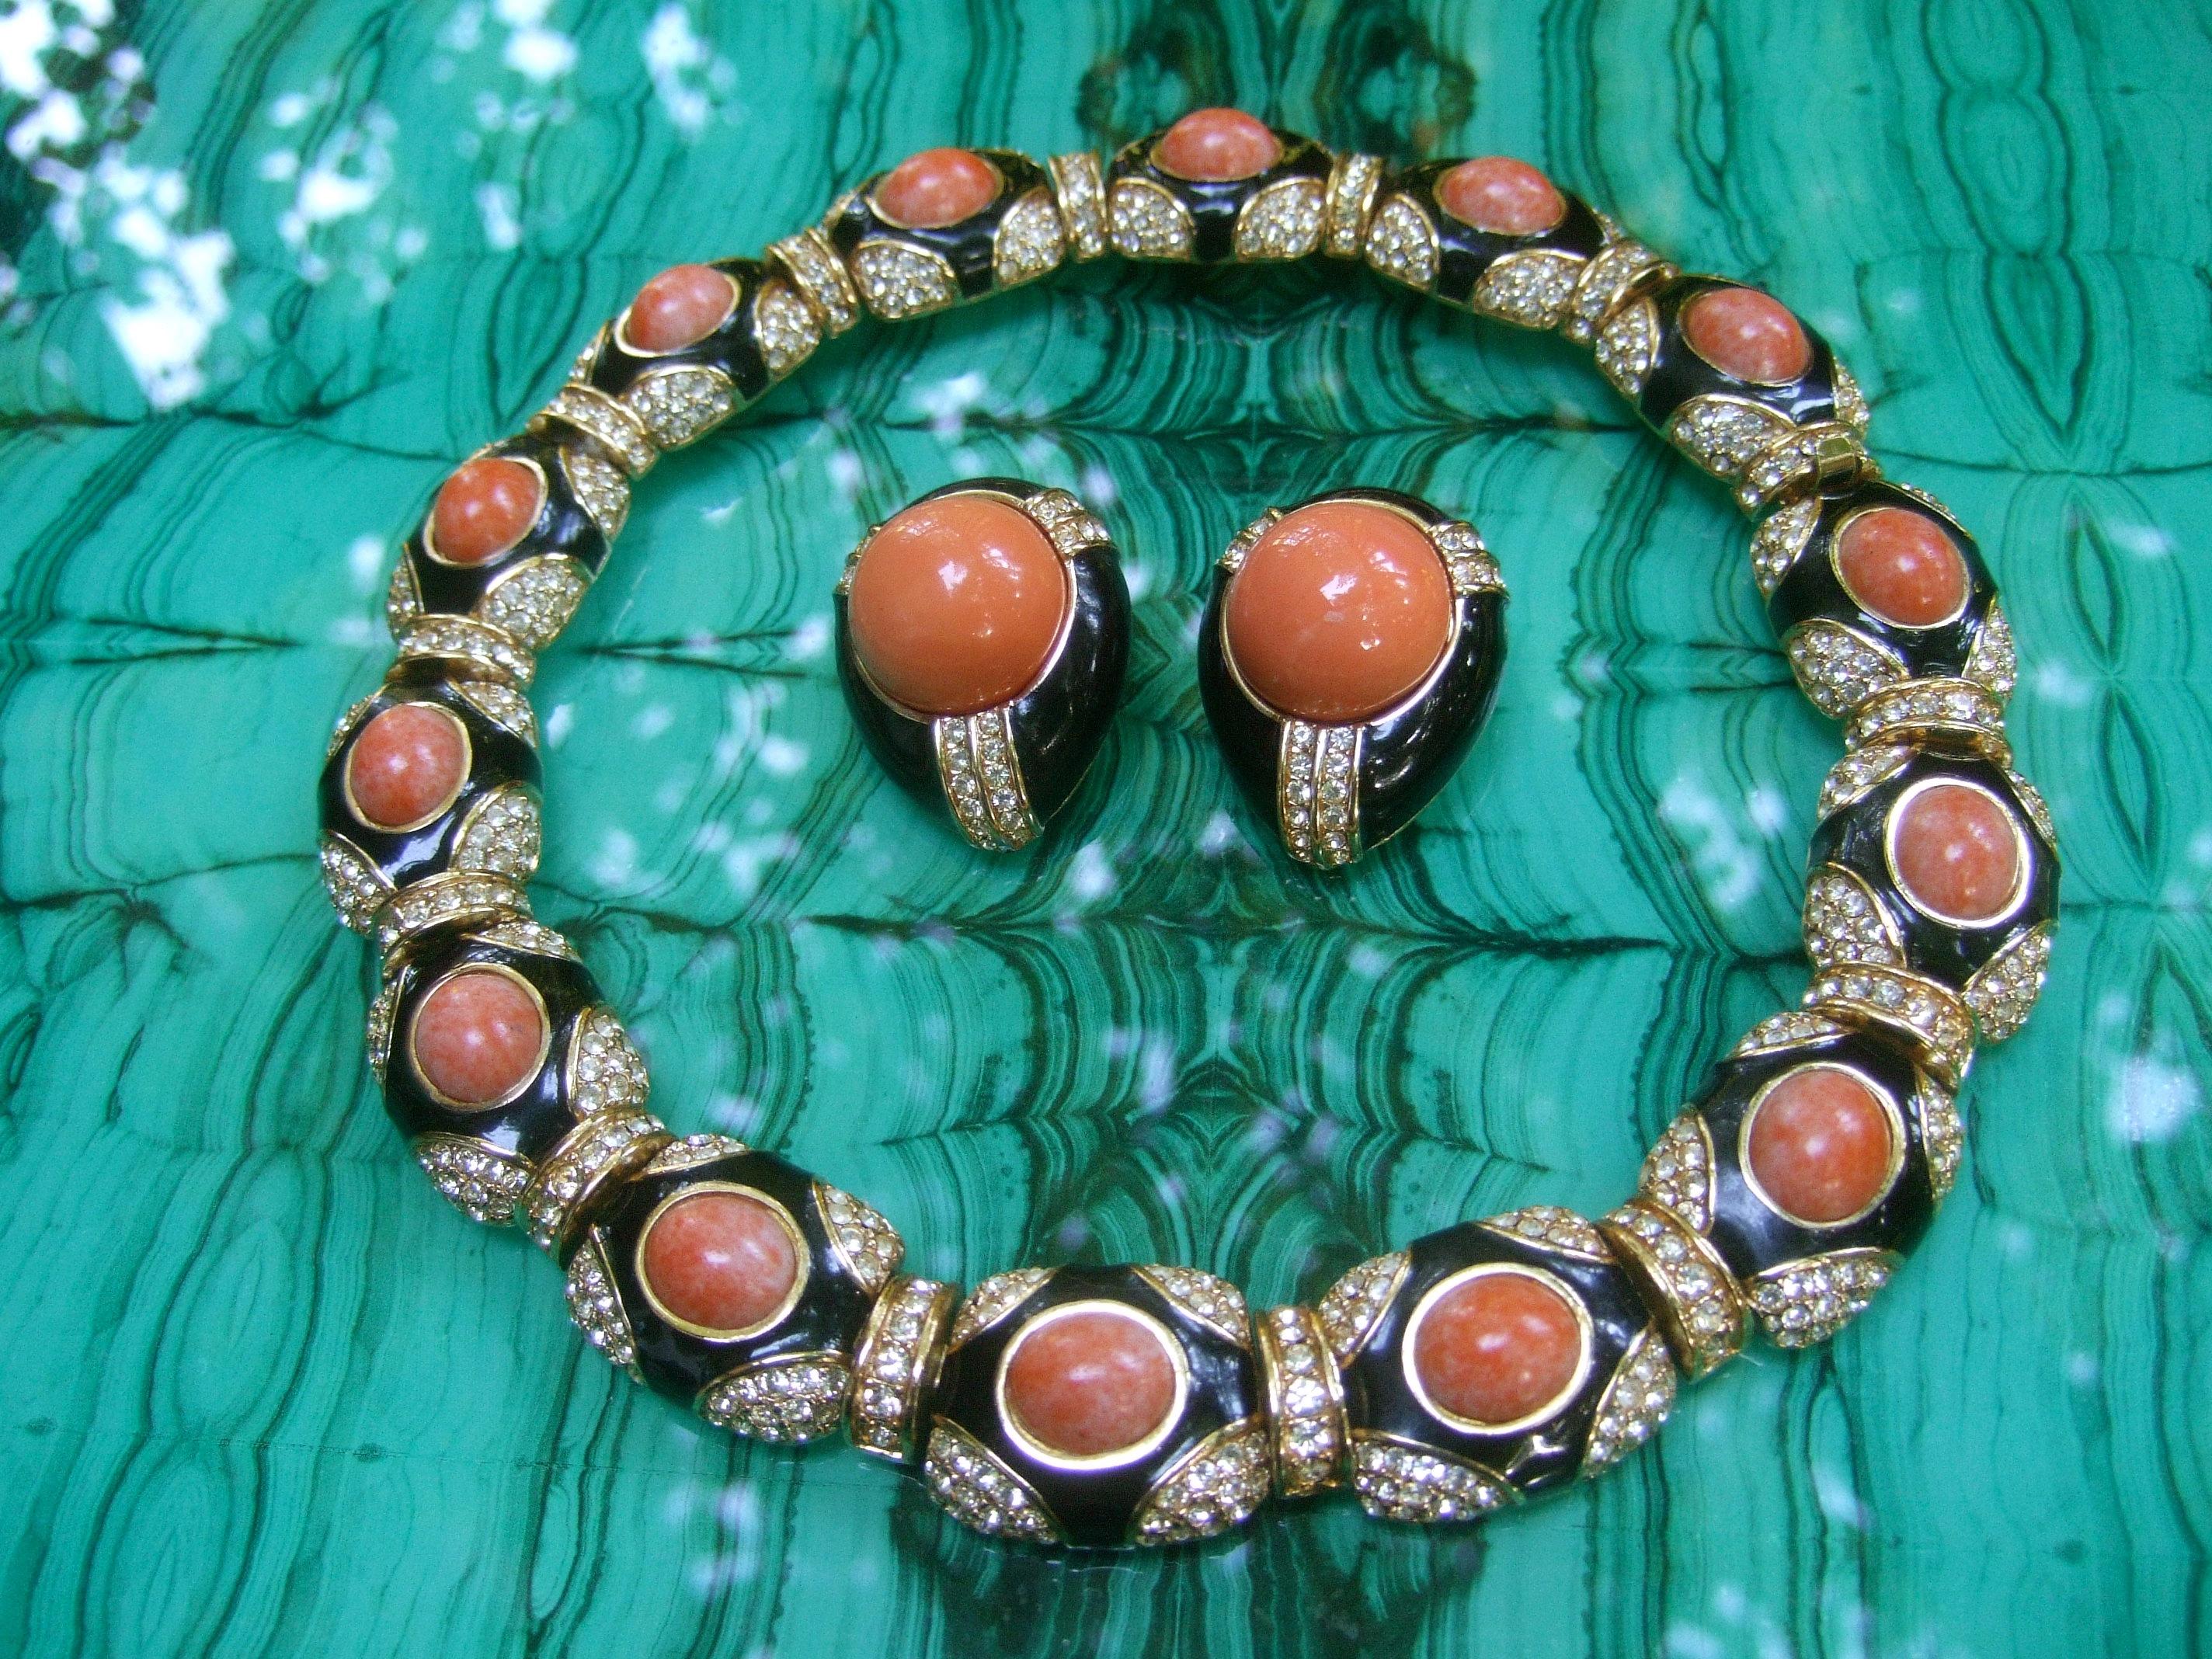 jeweled choker necklace worth